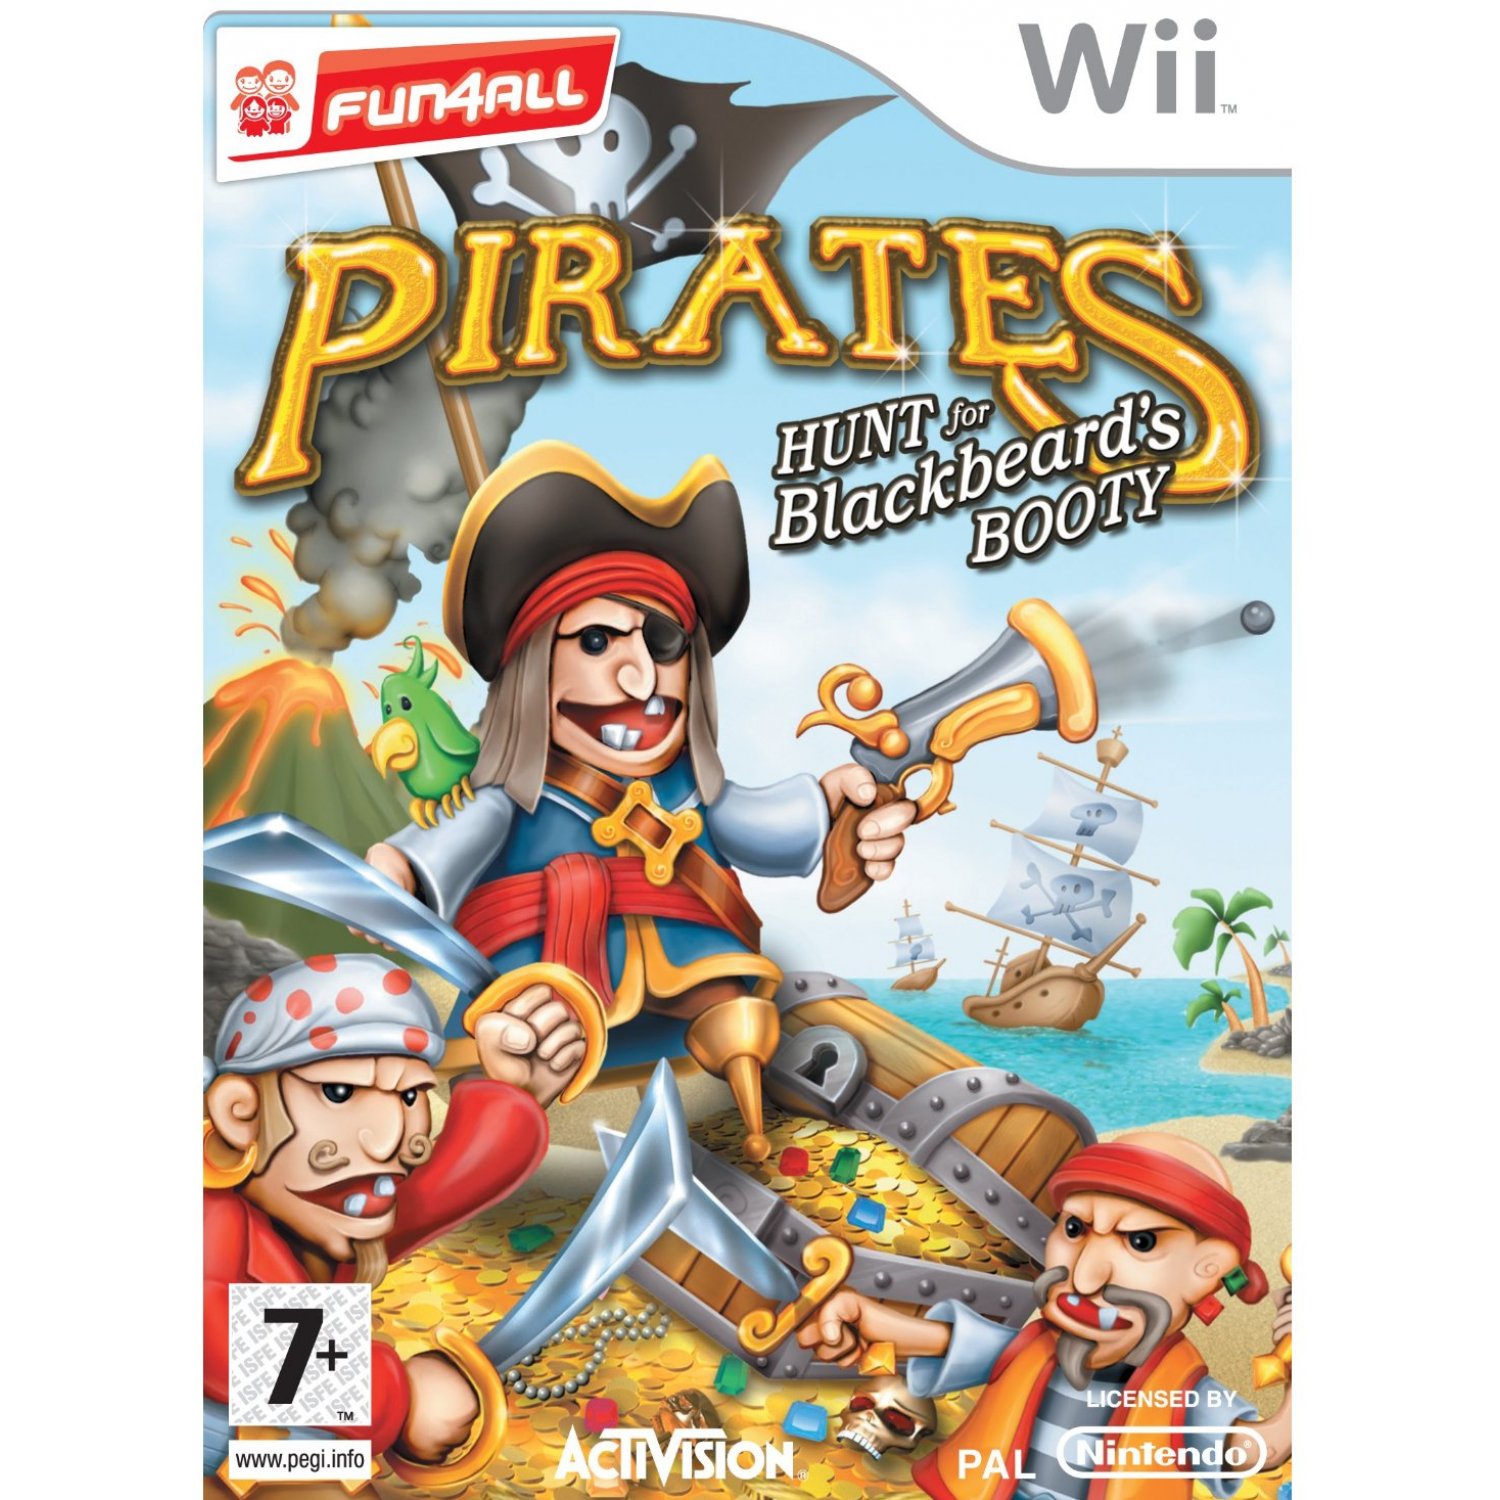 PiratesHunt for Blackbeards Booty - Nintendo Wii Játékok